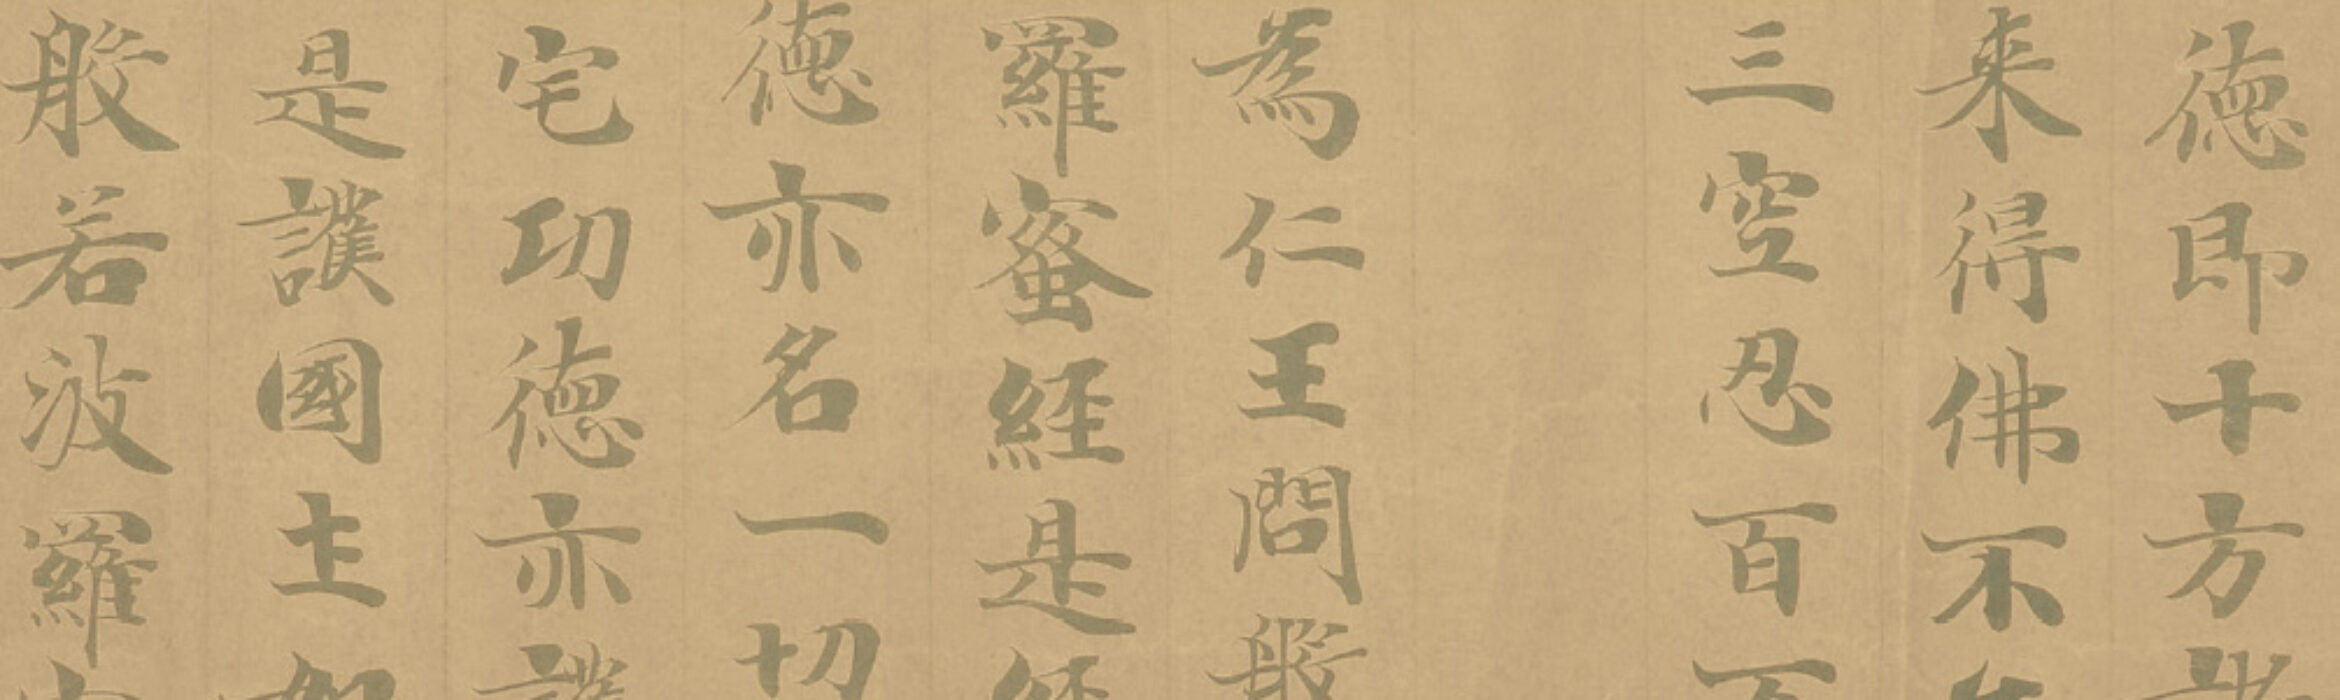 Fourth Volume of Hualin Translation Series On Buddhist Studies (Chinese)